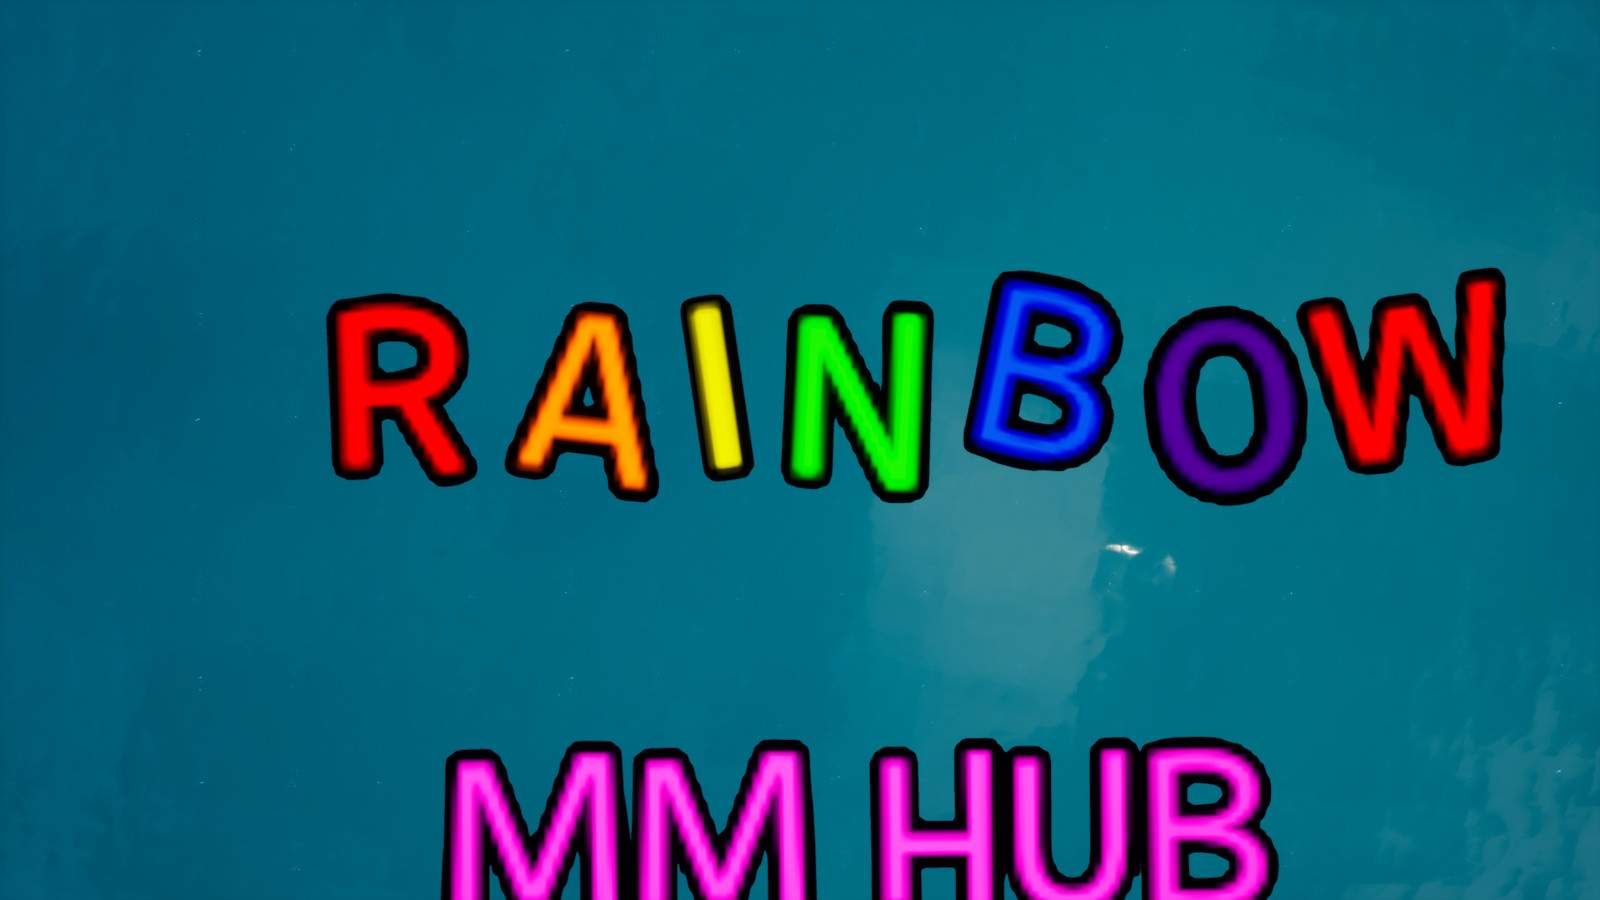 RAFFY'S RAINBOW MM HUB